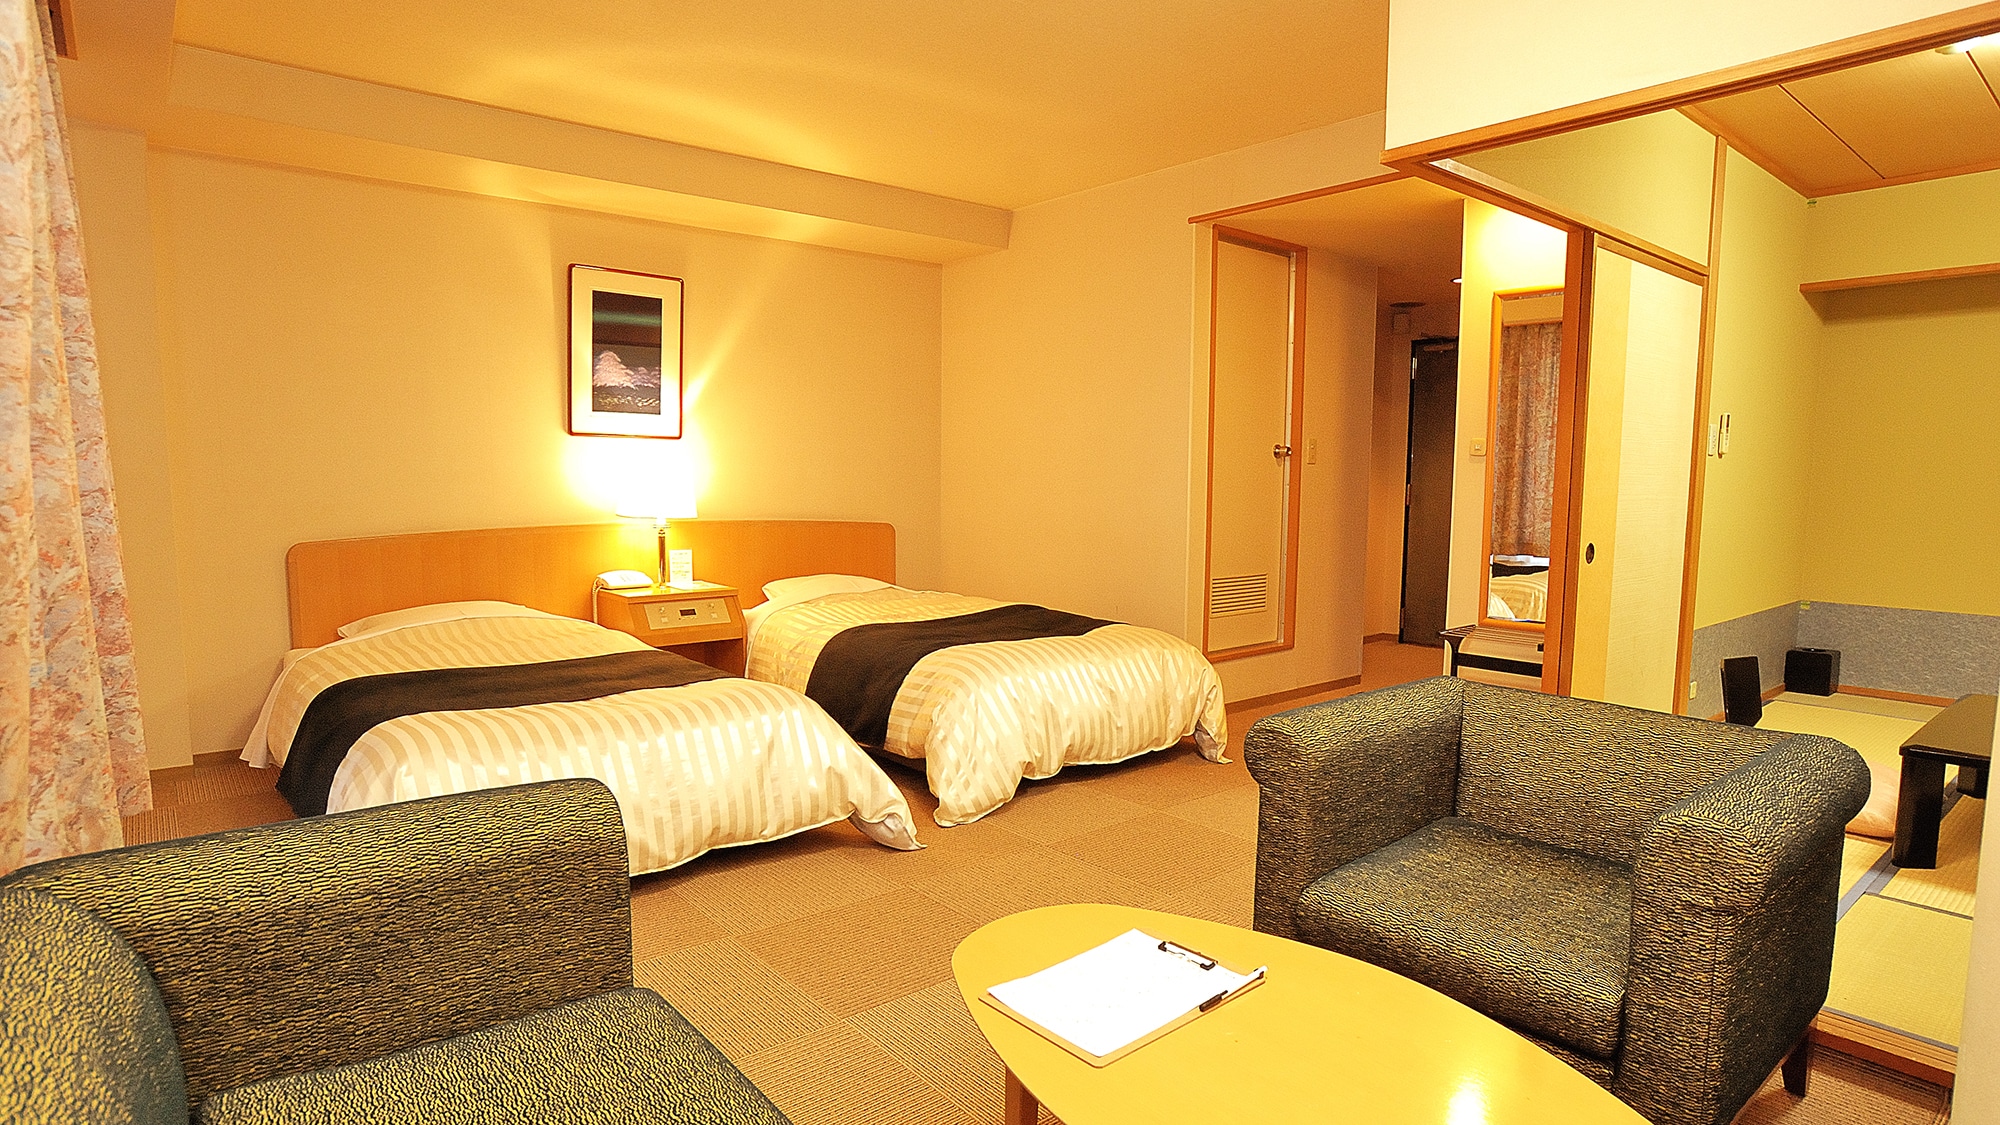 Fukitei Japanese-Western style room (2 beds + Japanese-style room 6 tatami mats)